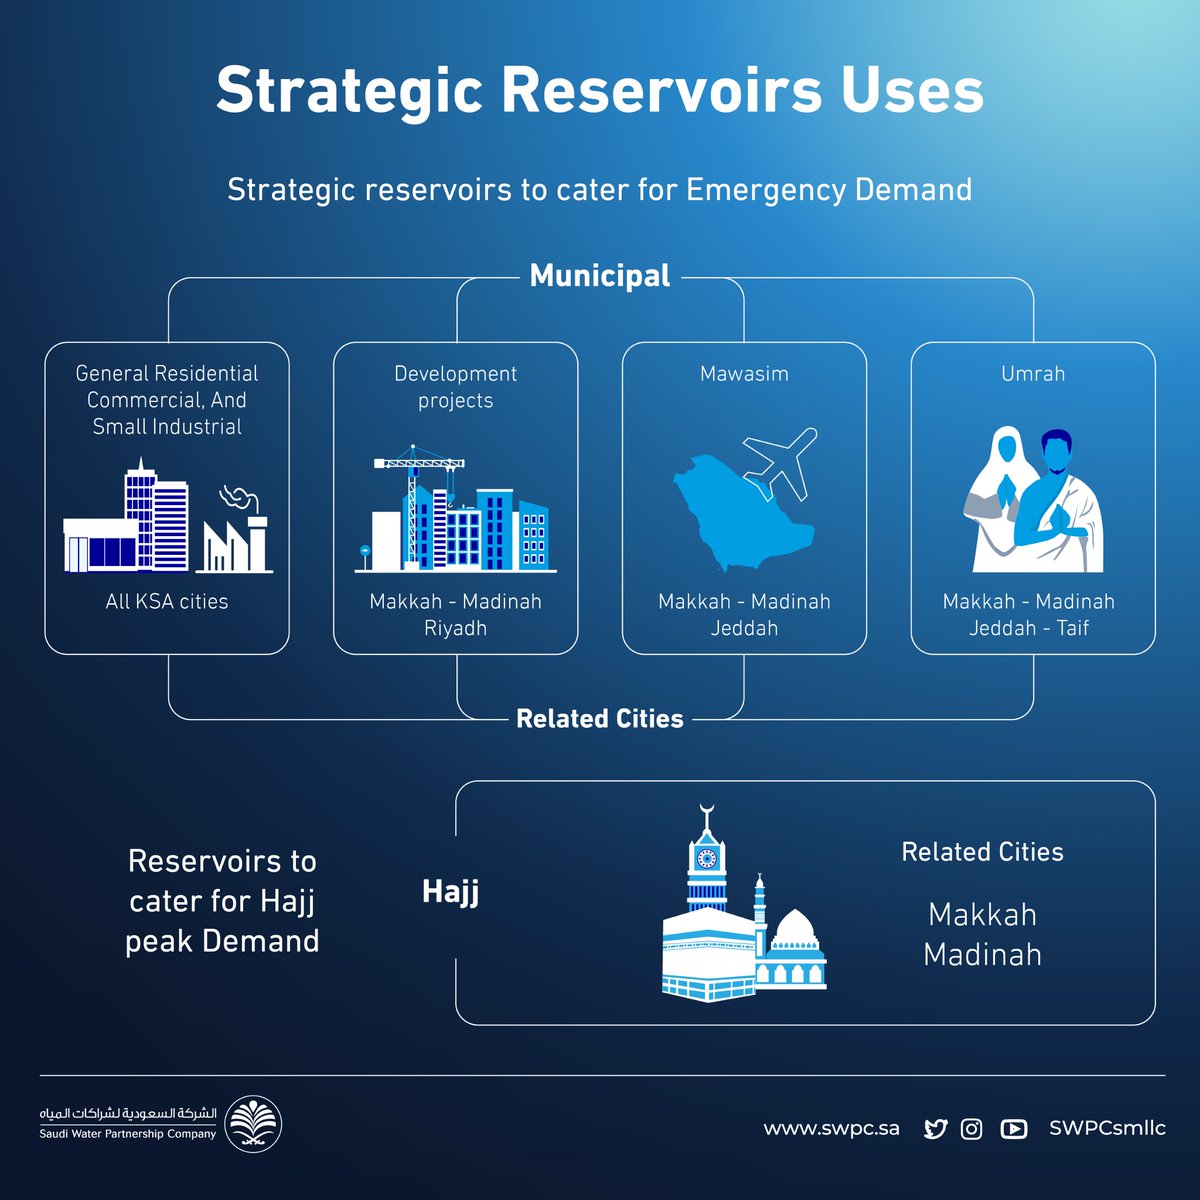 Strategic Reservoirs Uses

#الشركة_السعودية_لشراكات_المياه
#SWPC